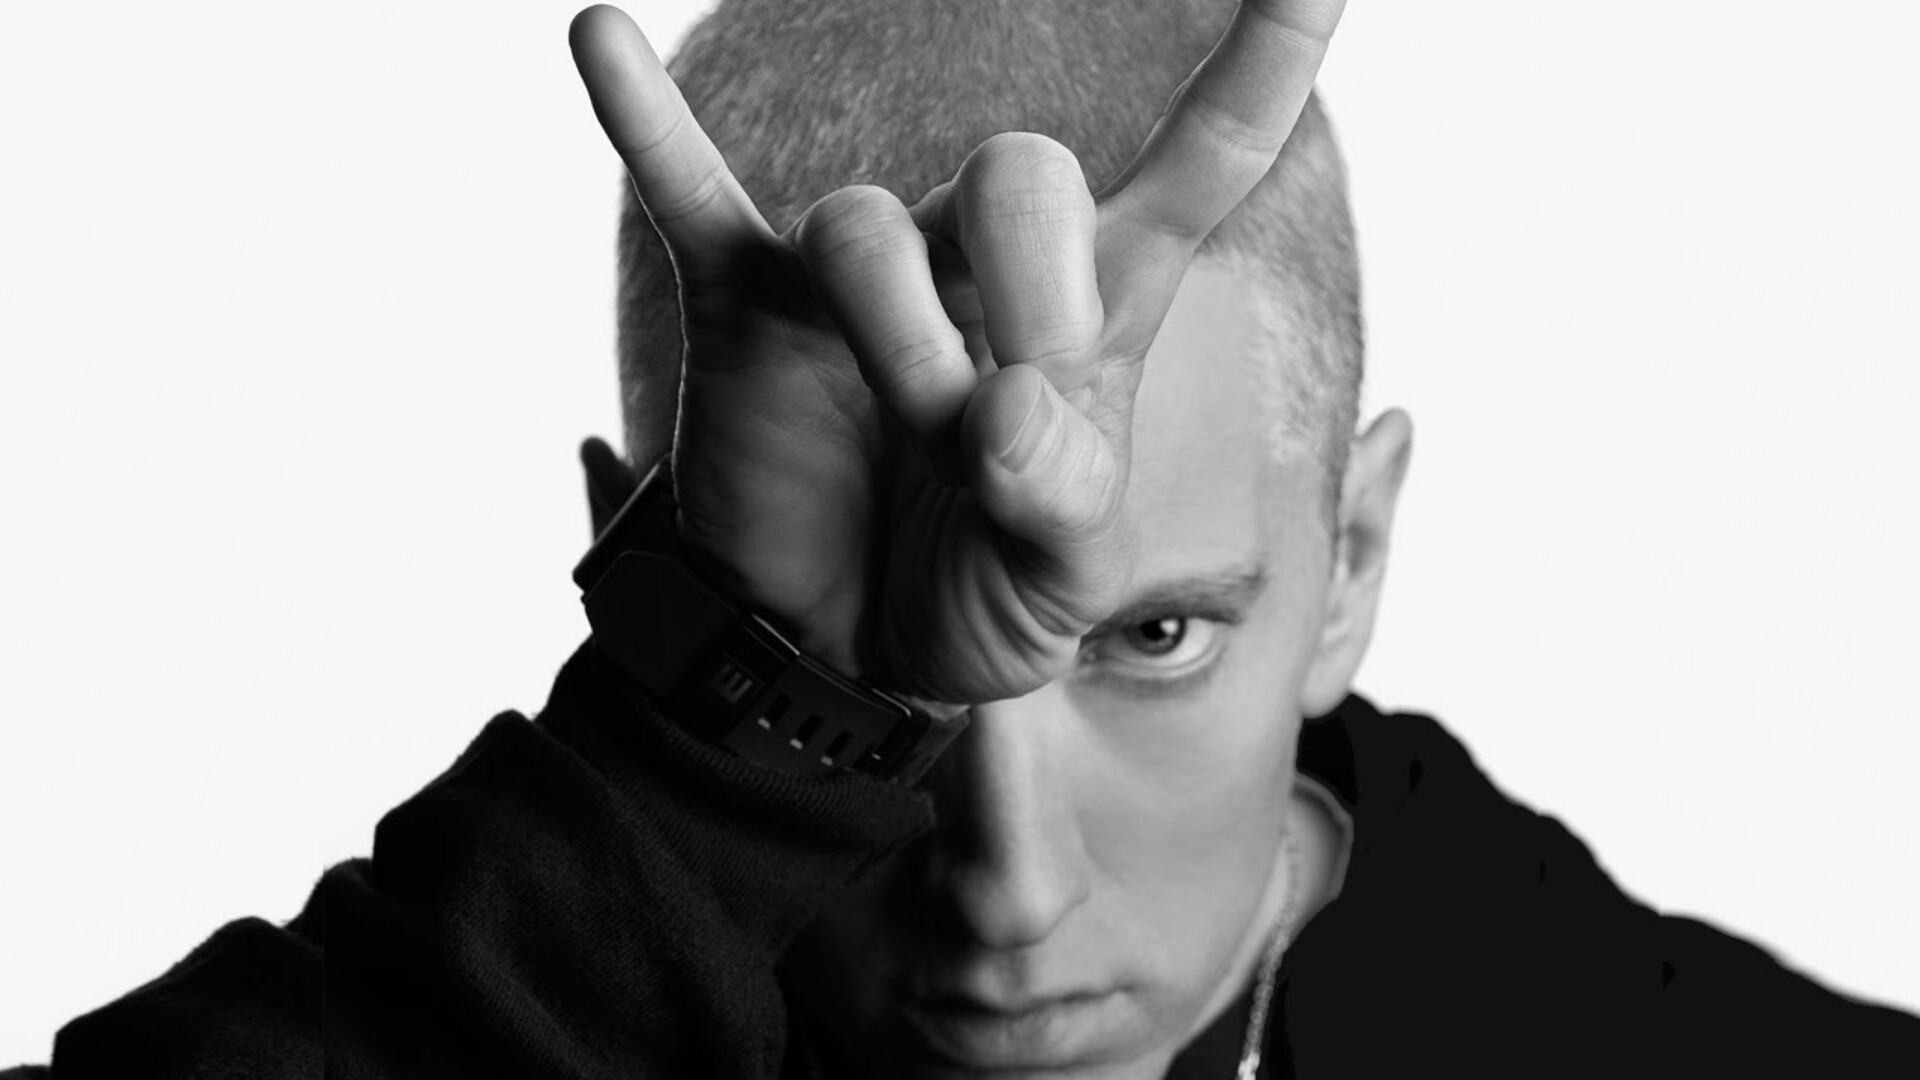 1920x1080 wallpaper Eminem Wallpapers | HD Wallpapers | Pinterest | Eminem, Wallpaper  and Wallpaper backgrounds